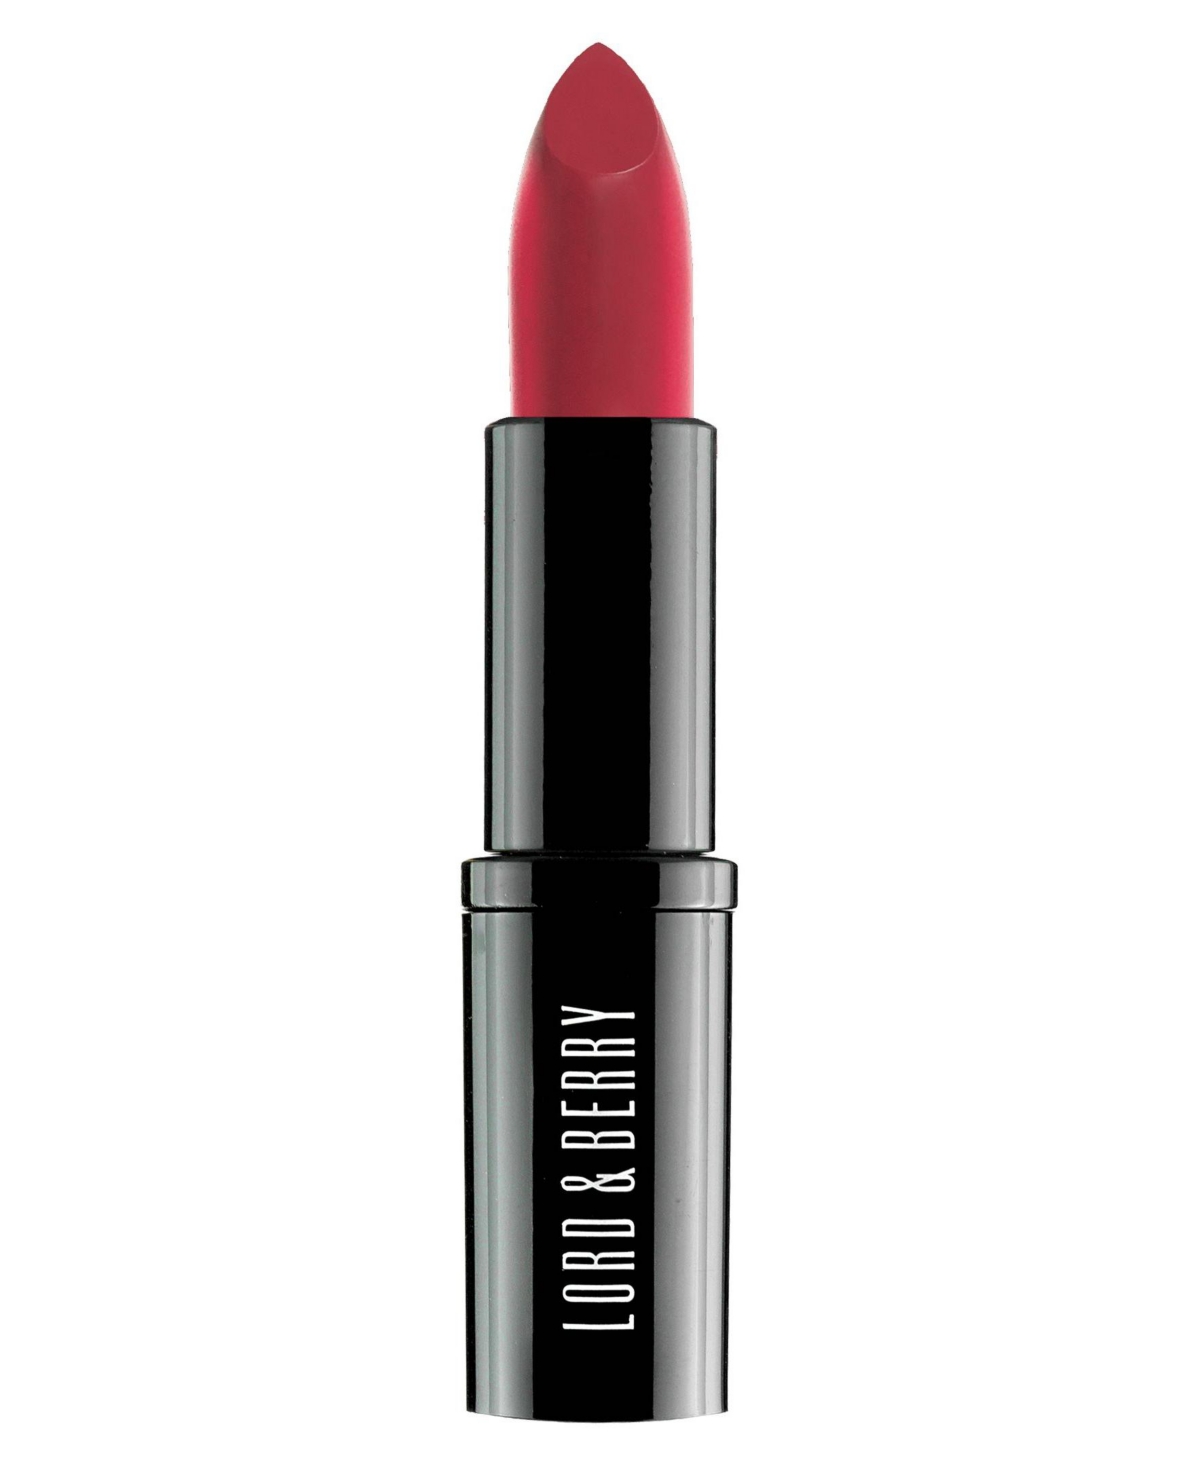 Lord & Berry Vogue Matte Lipstick